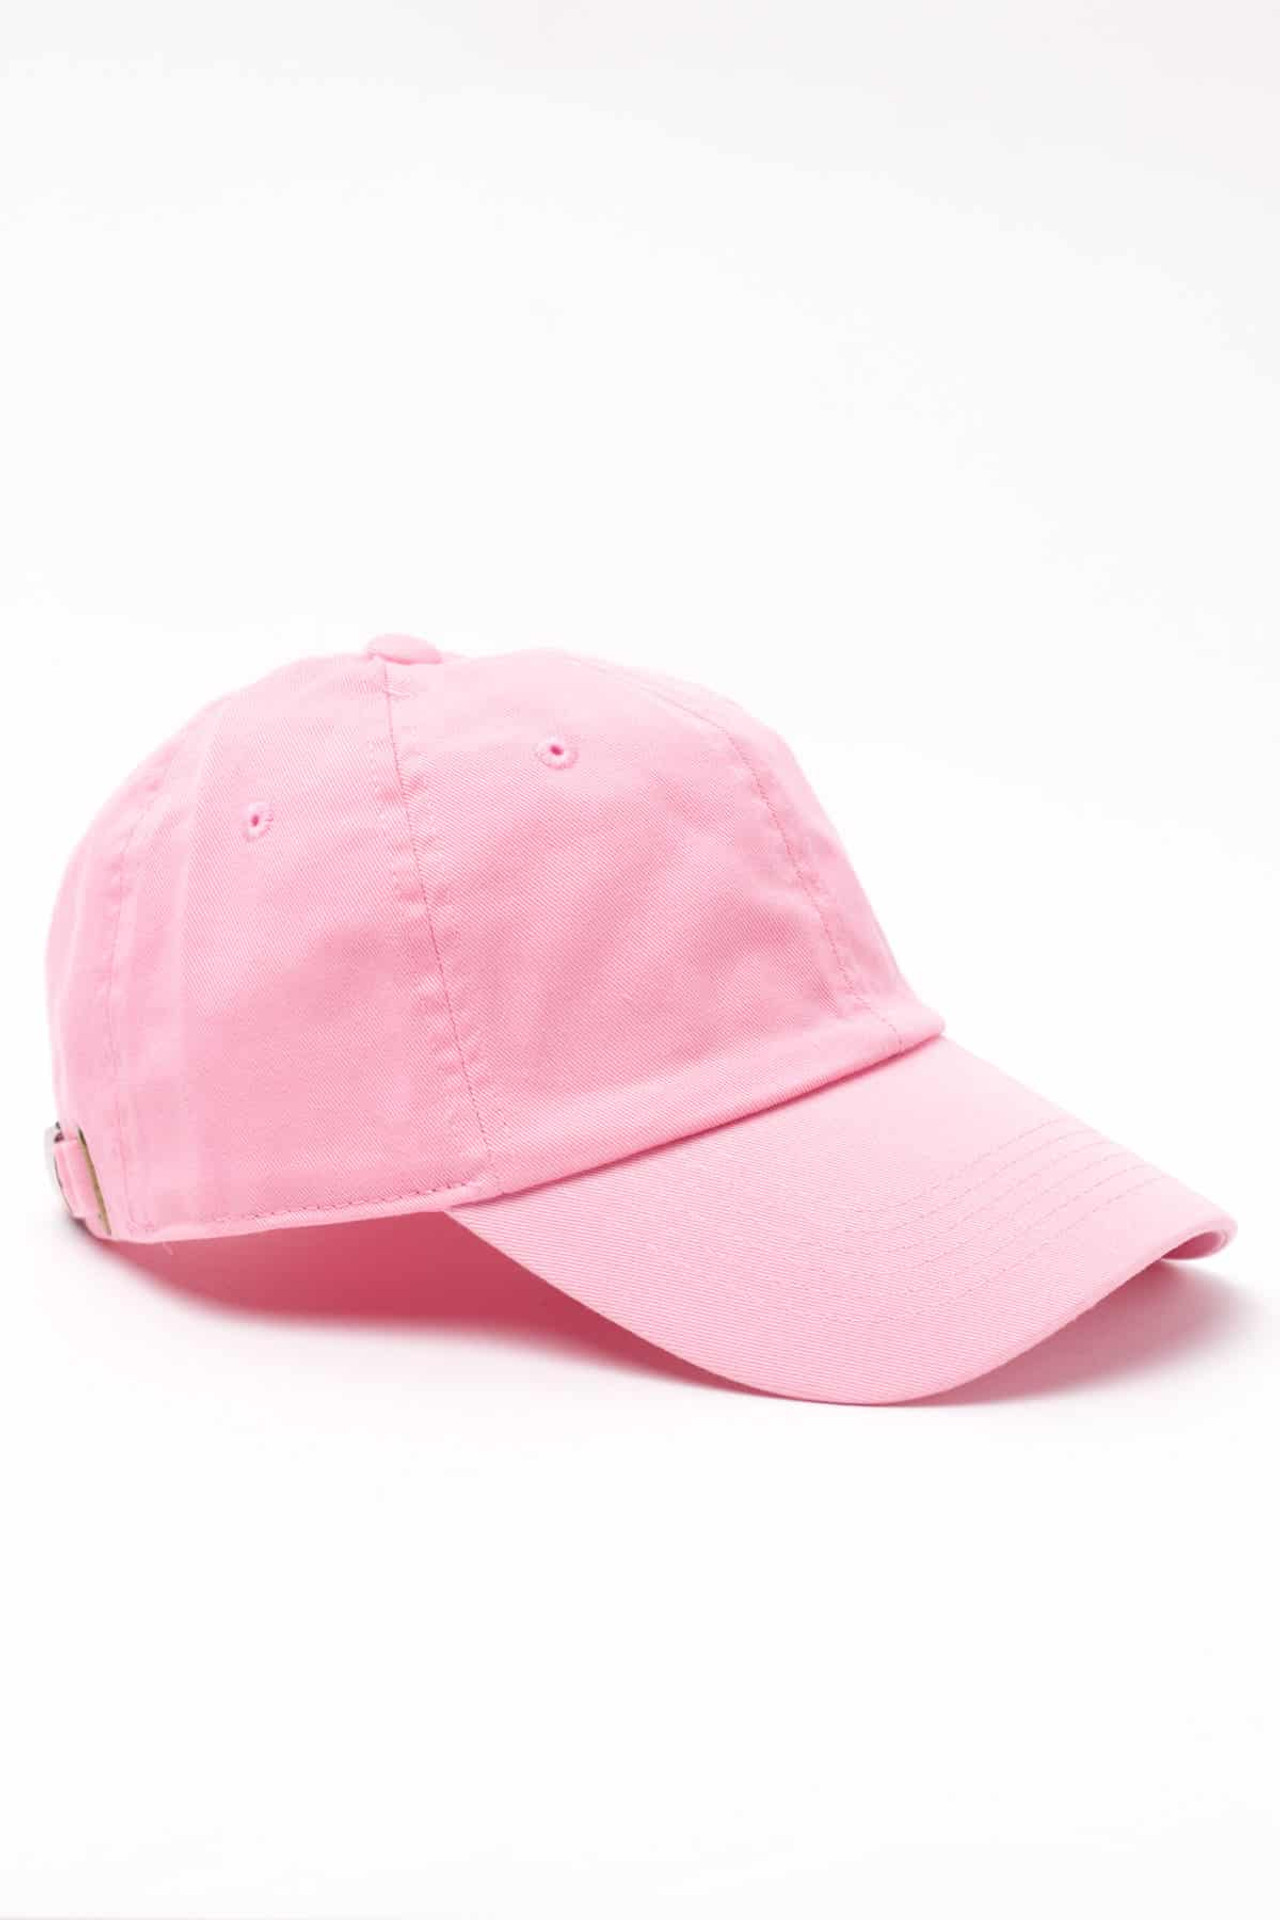 Solid Pink Dad Hat - Ragstock.com